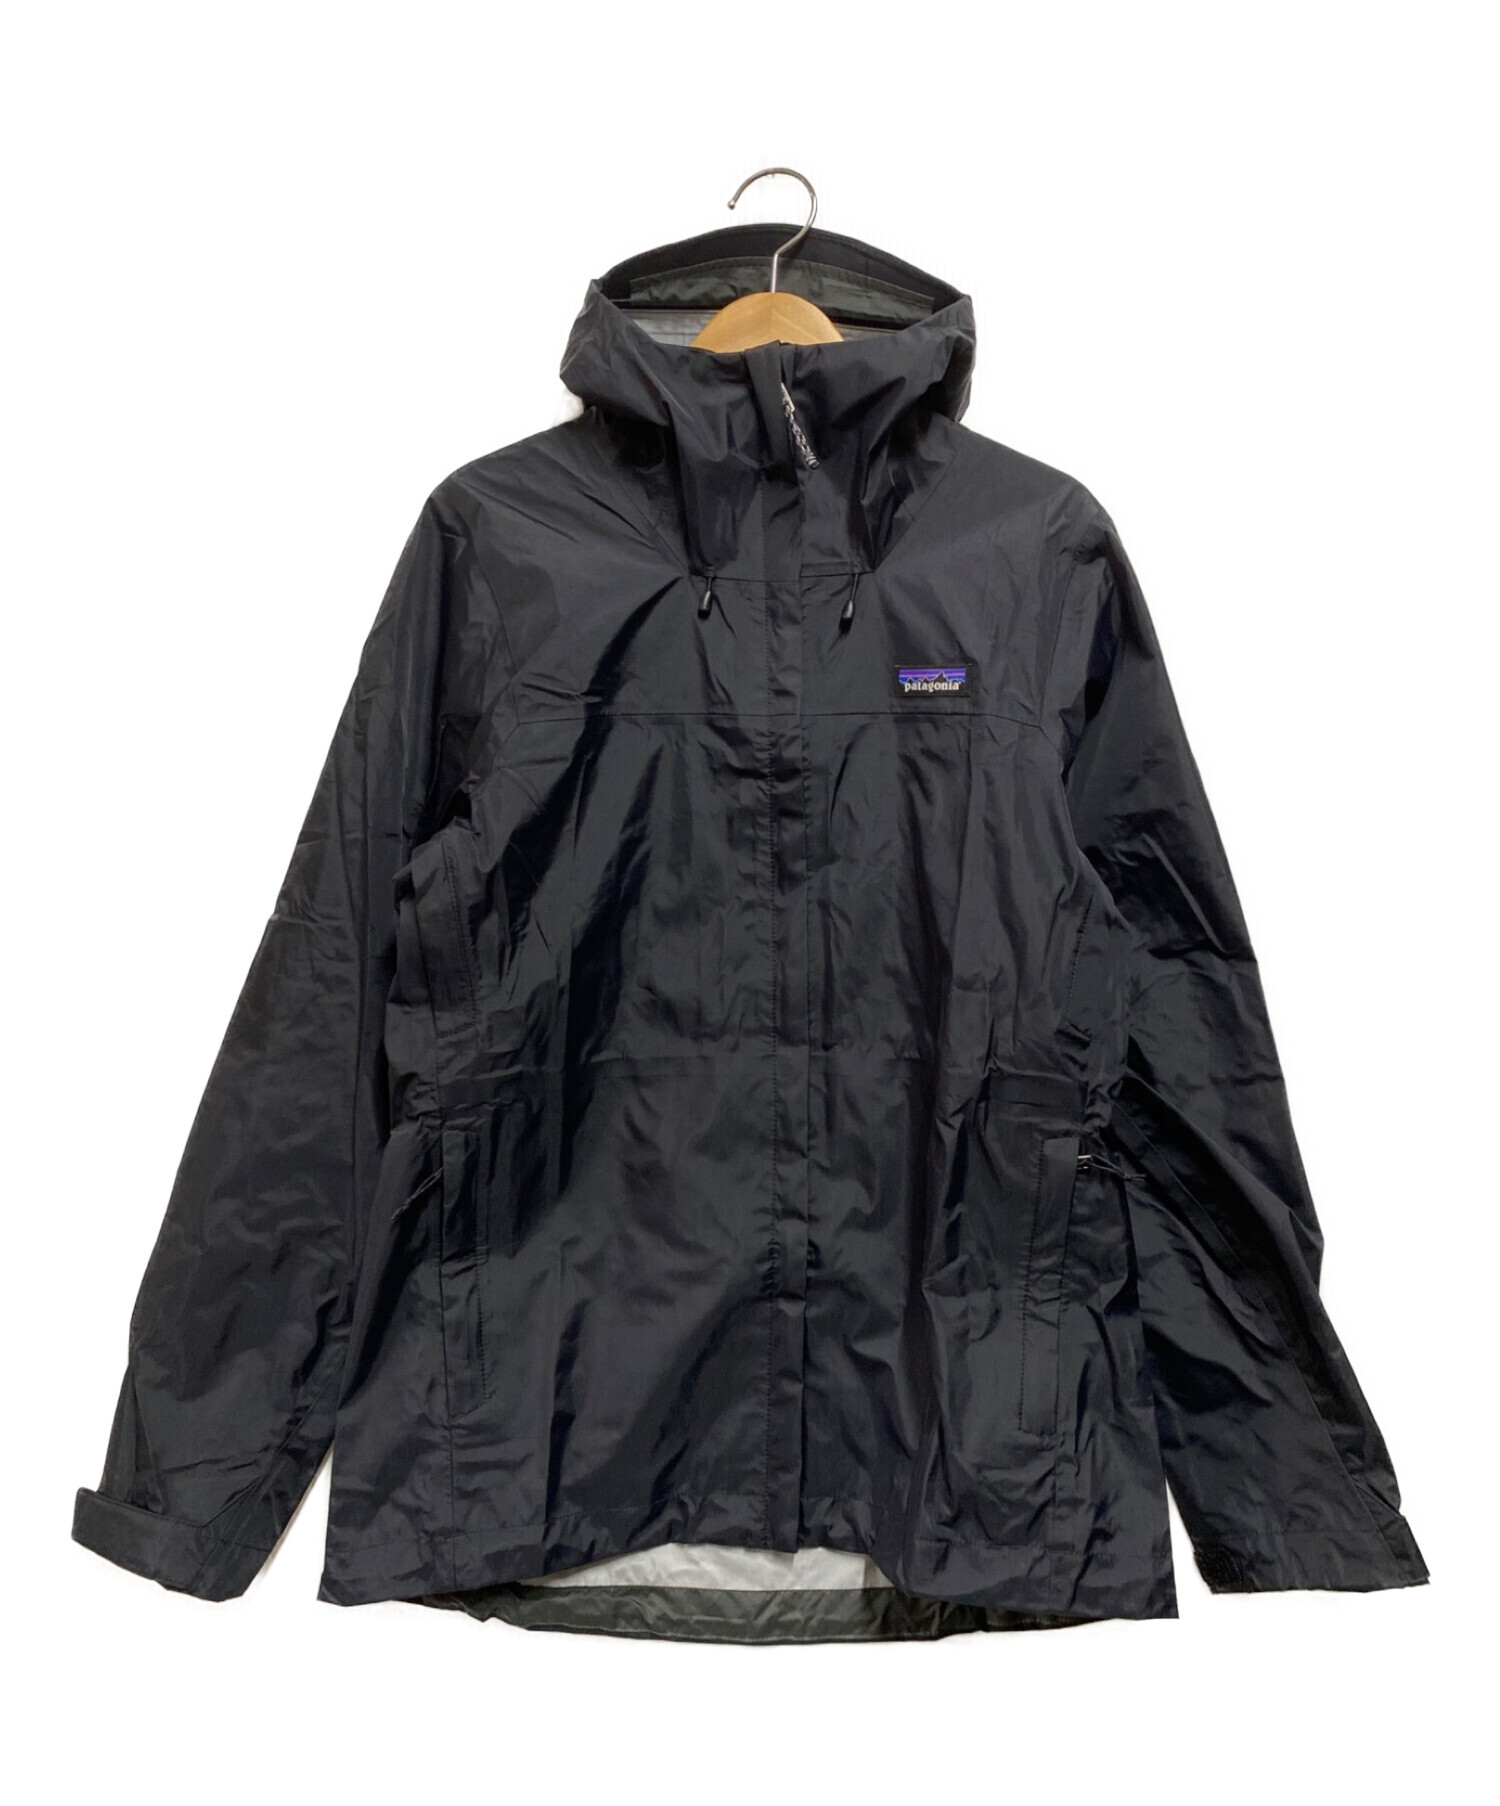 Patagonia (パタゴニア) Torrentshell 3L Jacket ブラック サイズ:XS 未使用品